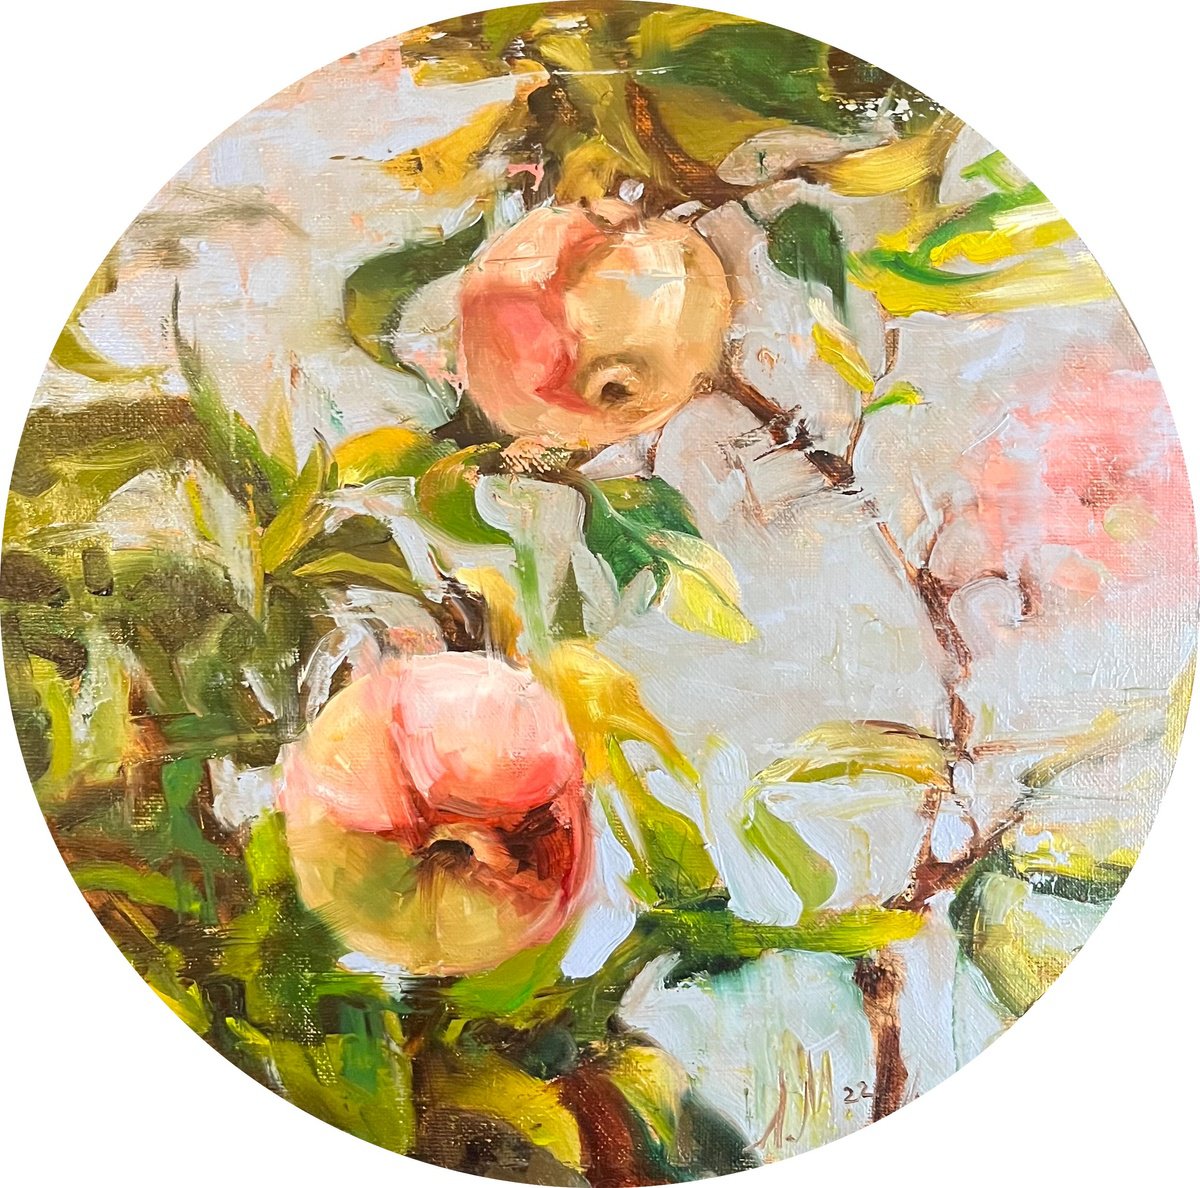 Ruddy apples by Elena Mashajeva-Agraphiotis